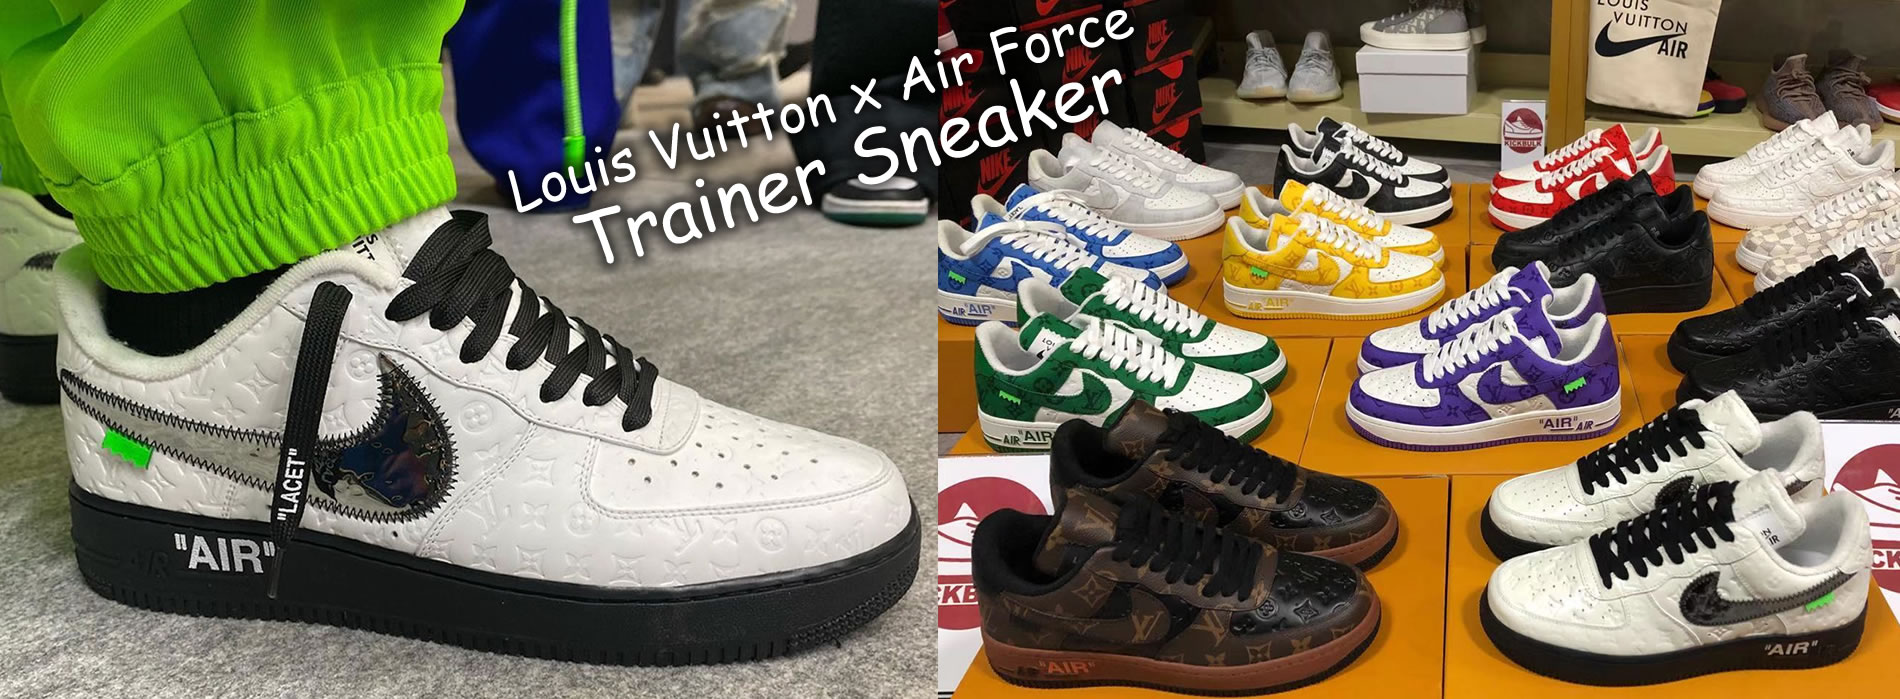 Louis Vuitton x Air Force 1 Trainer MINGE Sneaker